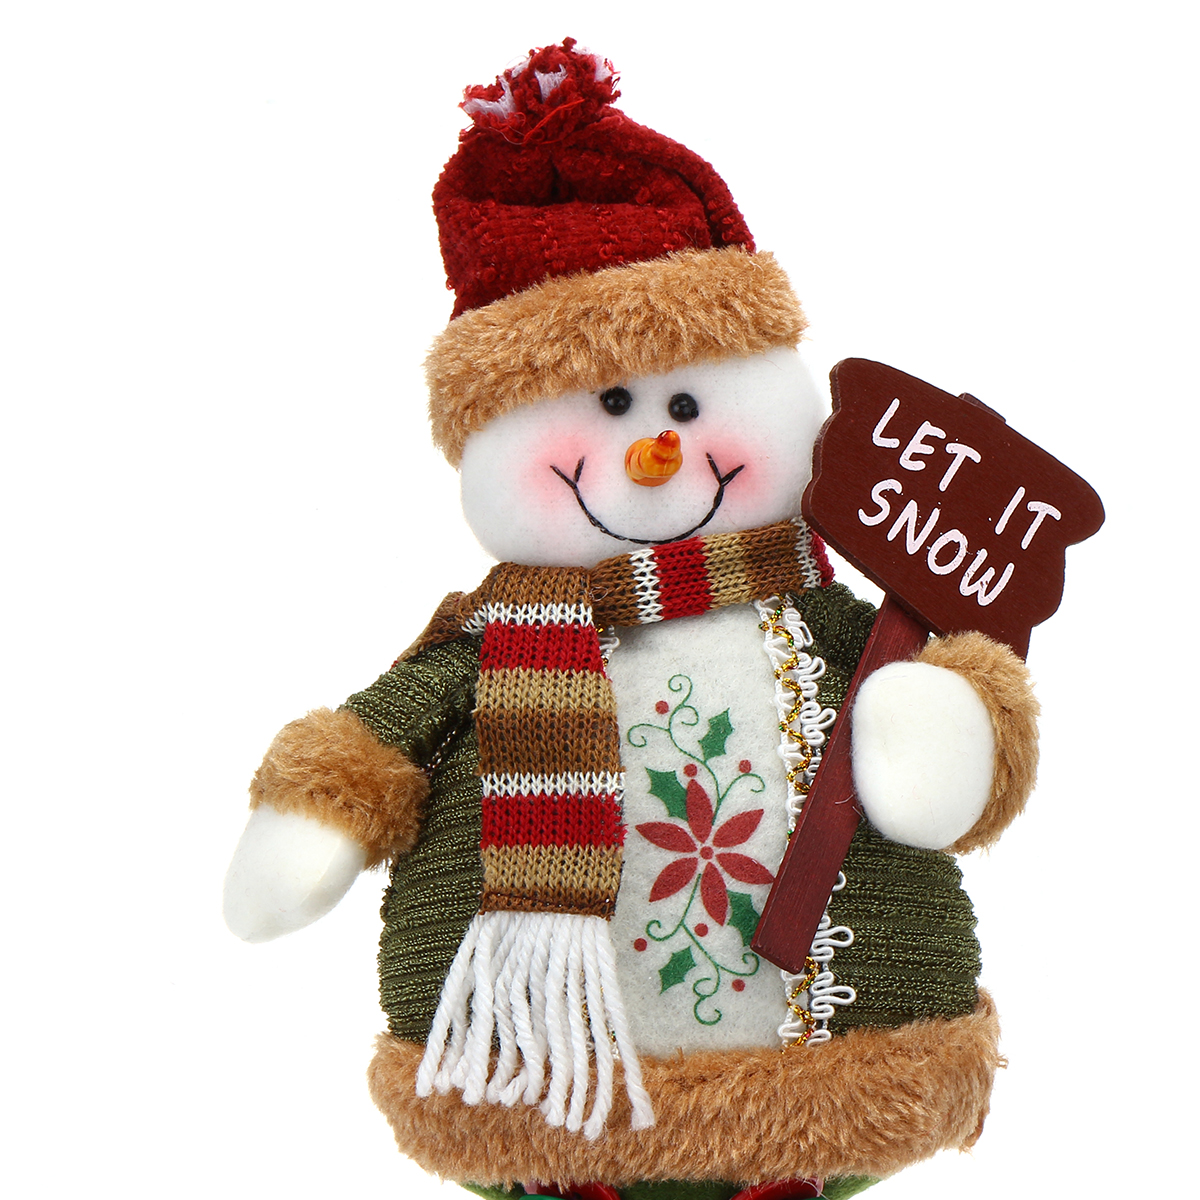 Santa-Snowman-Reindeer-Doll-Christmas-Decoration-Tree-Hanging-Ornament-Gift-1352337-6